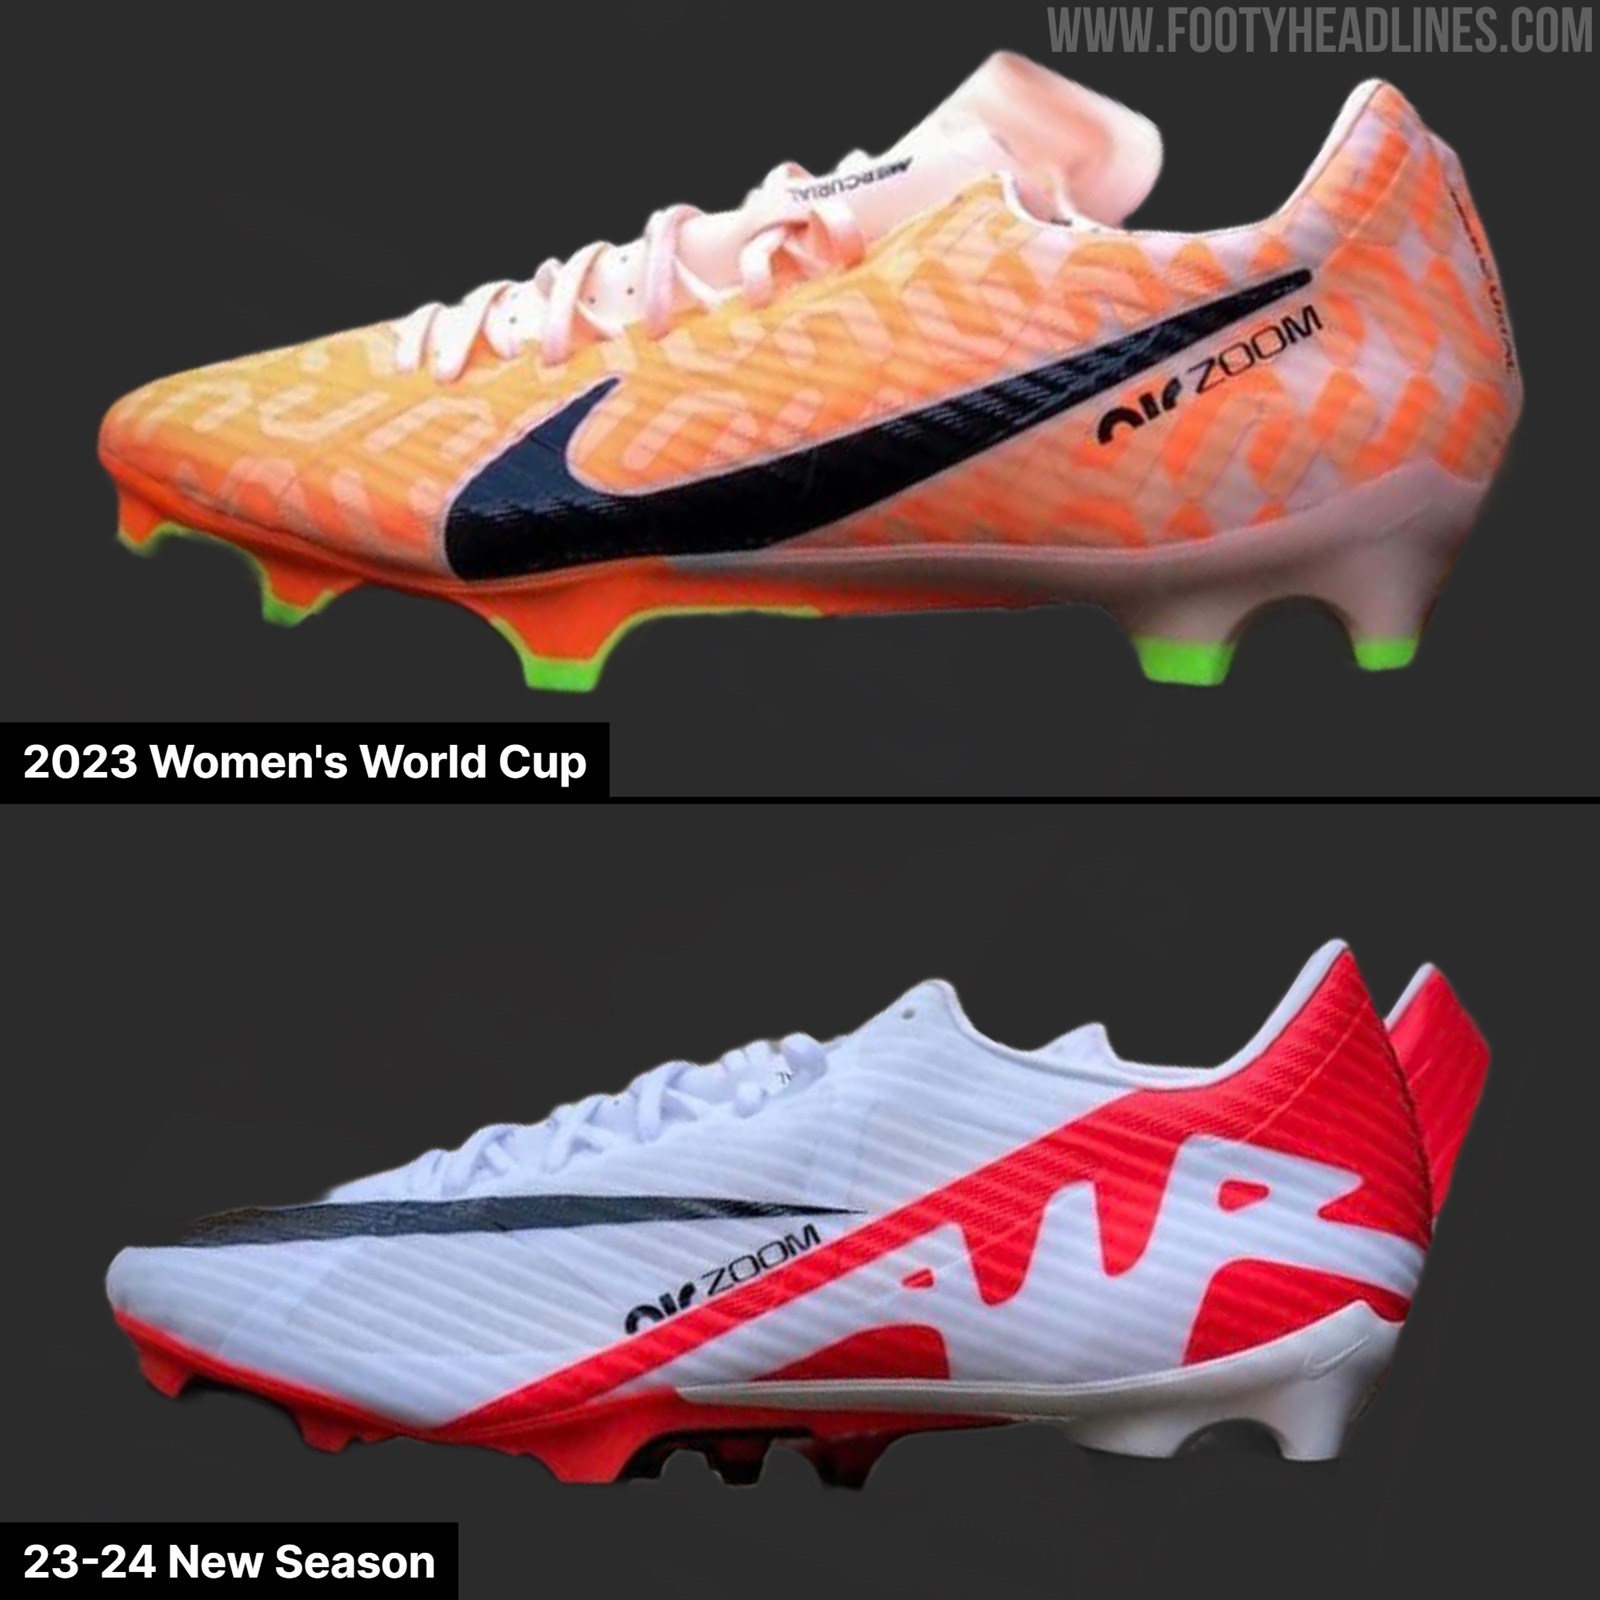 vers bagage Uitdaging Nike Zoom Mercurial 2023 Women's World Cup & 23-24 New Season Fußballschuhe  geleakt - Nur Fussball